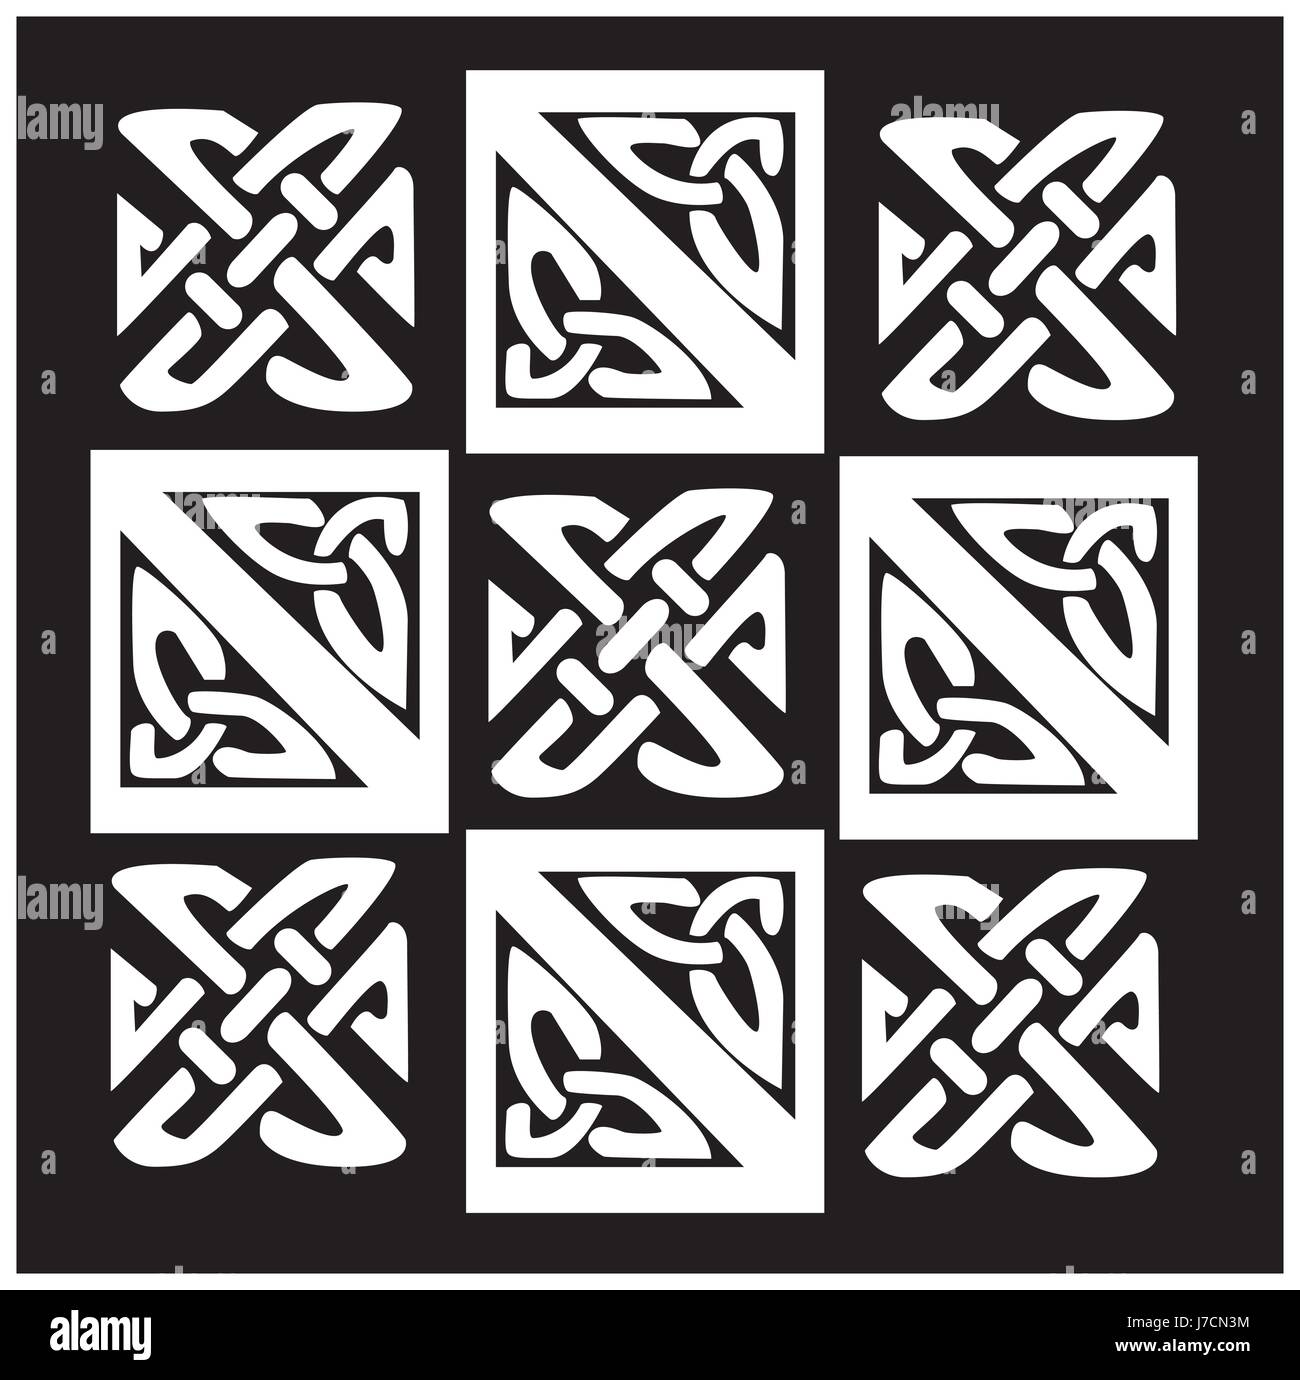 black swarthy jetblack deep black abstract ireland pattern irish celtic design Stock Photo